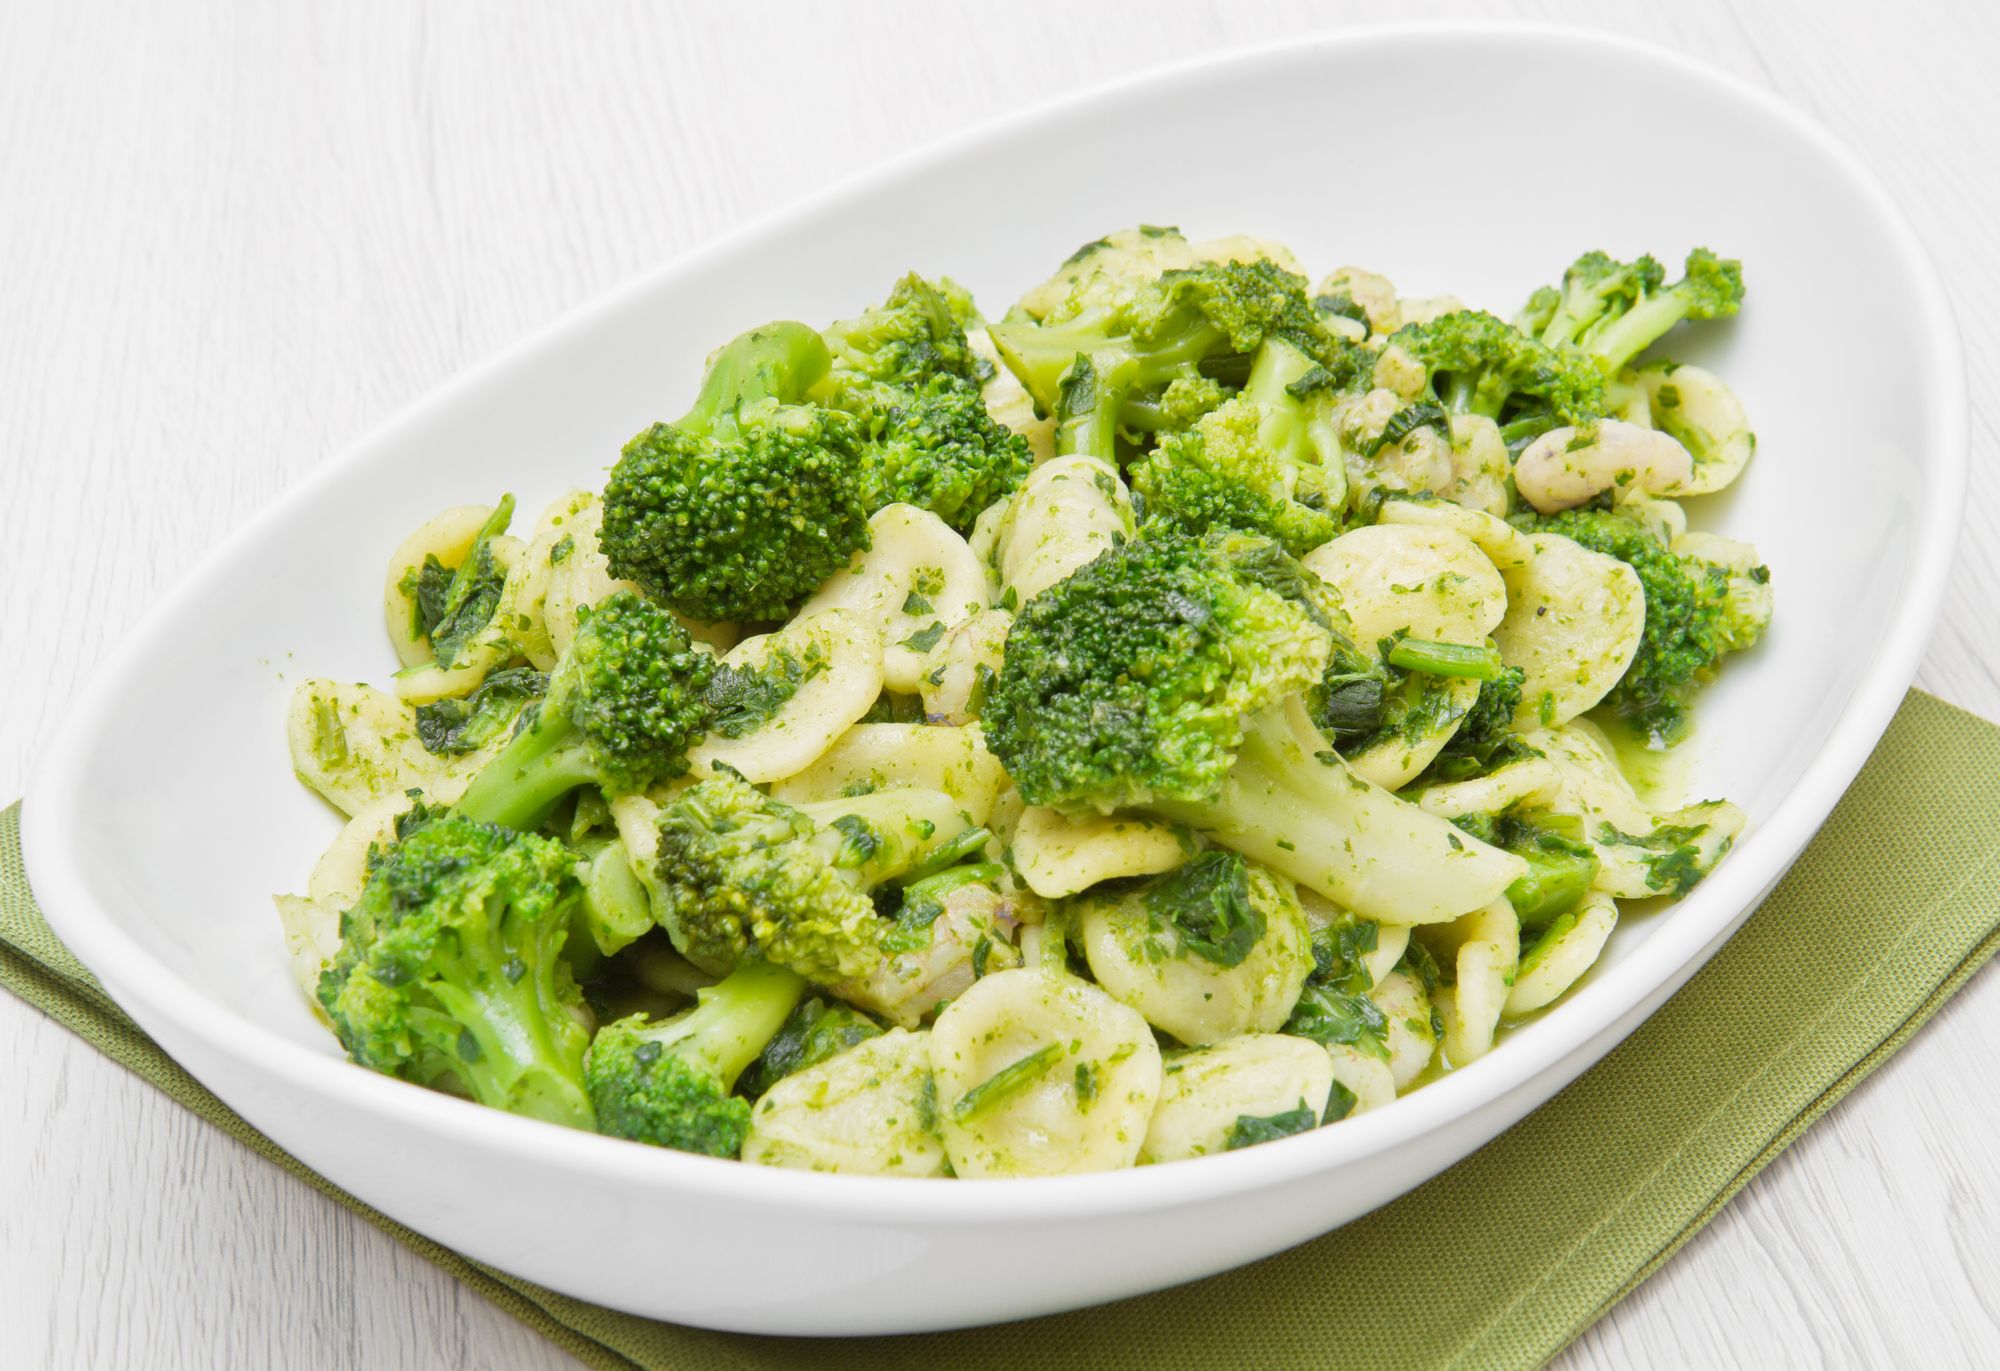 Pasta with Broccoli and Pistachio Pesto